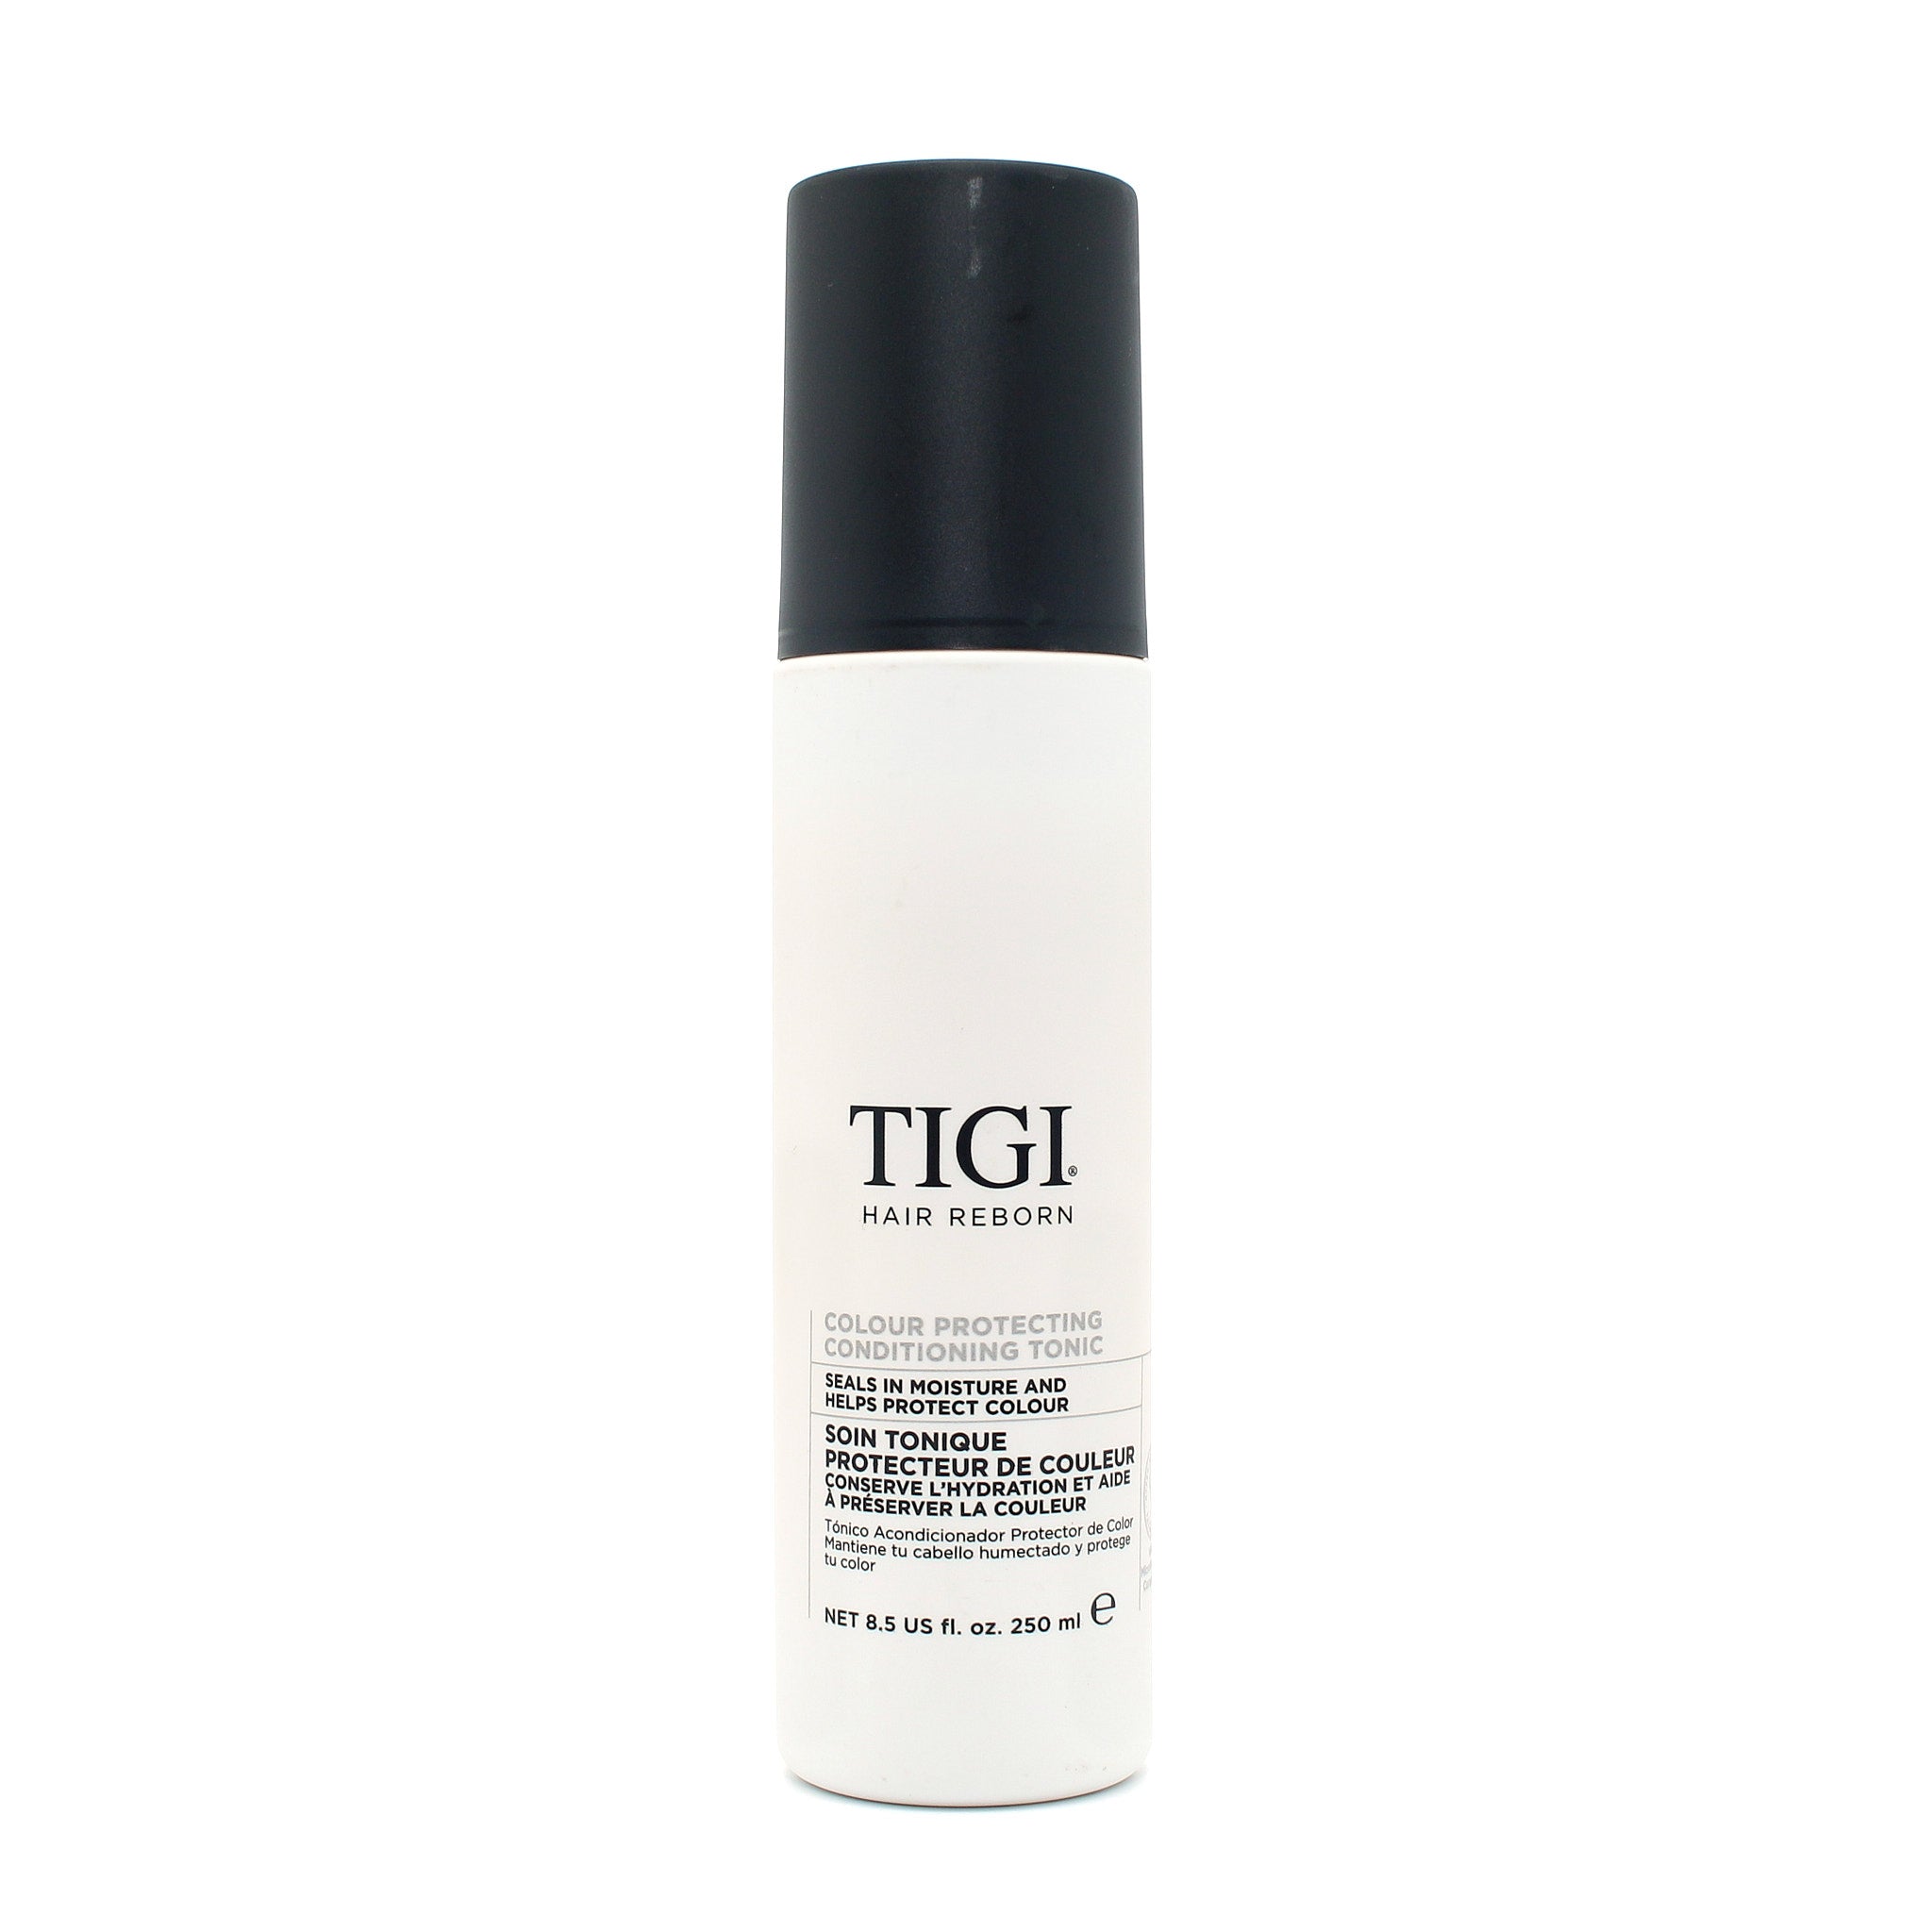 TIGI Hair Reborn Color Protecting Conditioning Tonic 8.5 oz